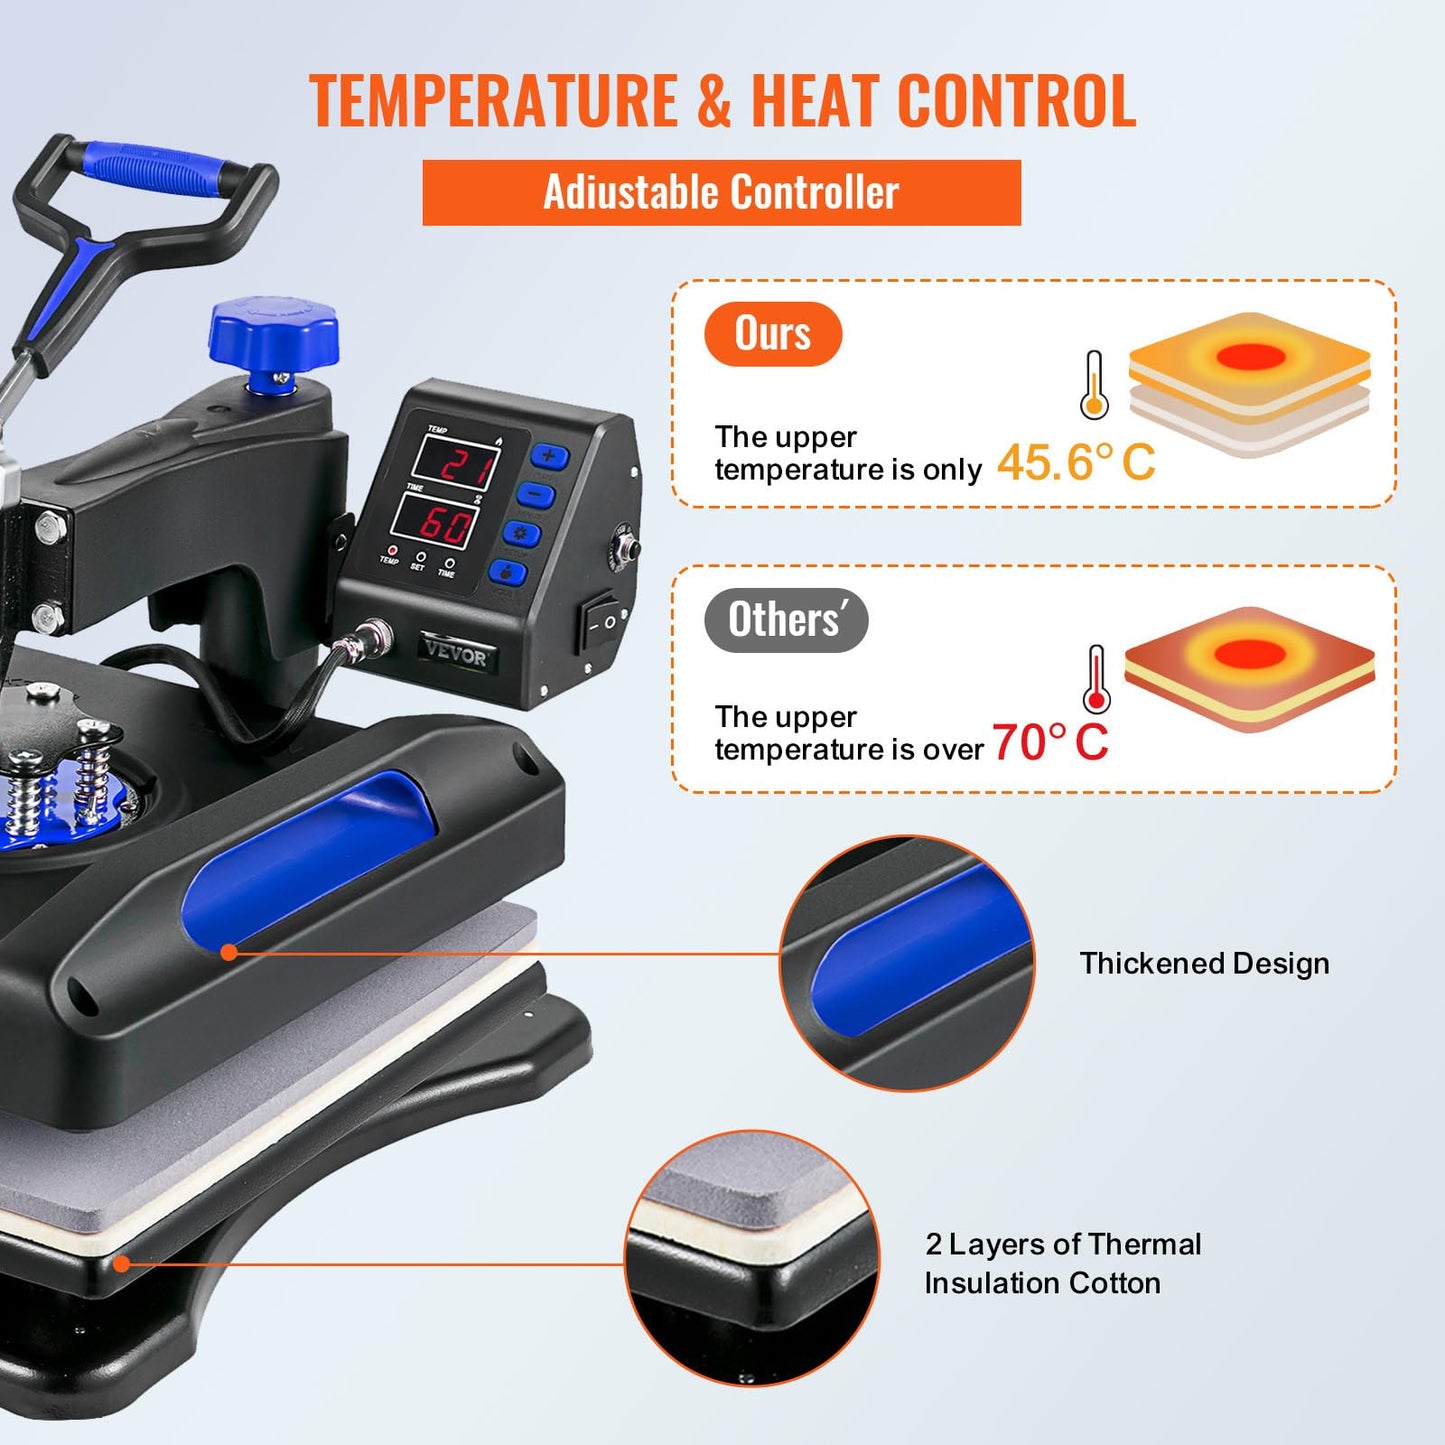 VEVOR Heat Press, 15x15inches Heat Press Machine 5 in 1, Swing Away Digital Control Multifunctional Heat Press, Anti-Scald Fast-Heating, Sublimation